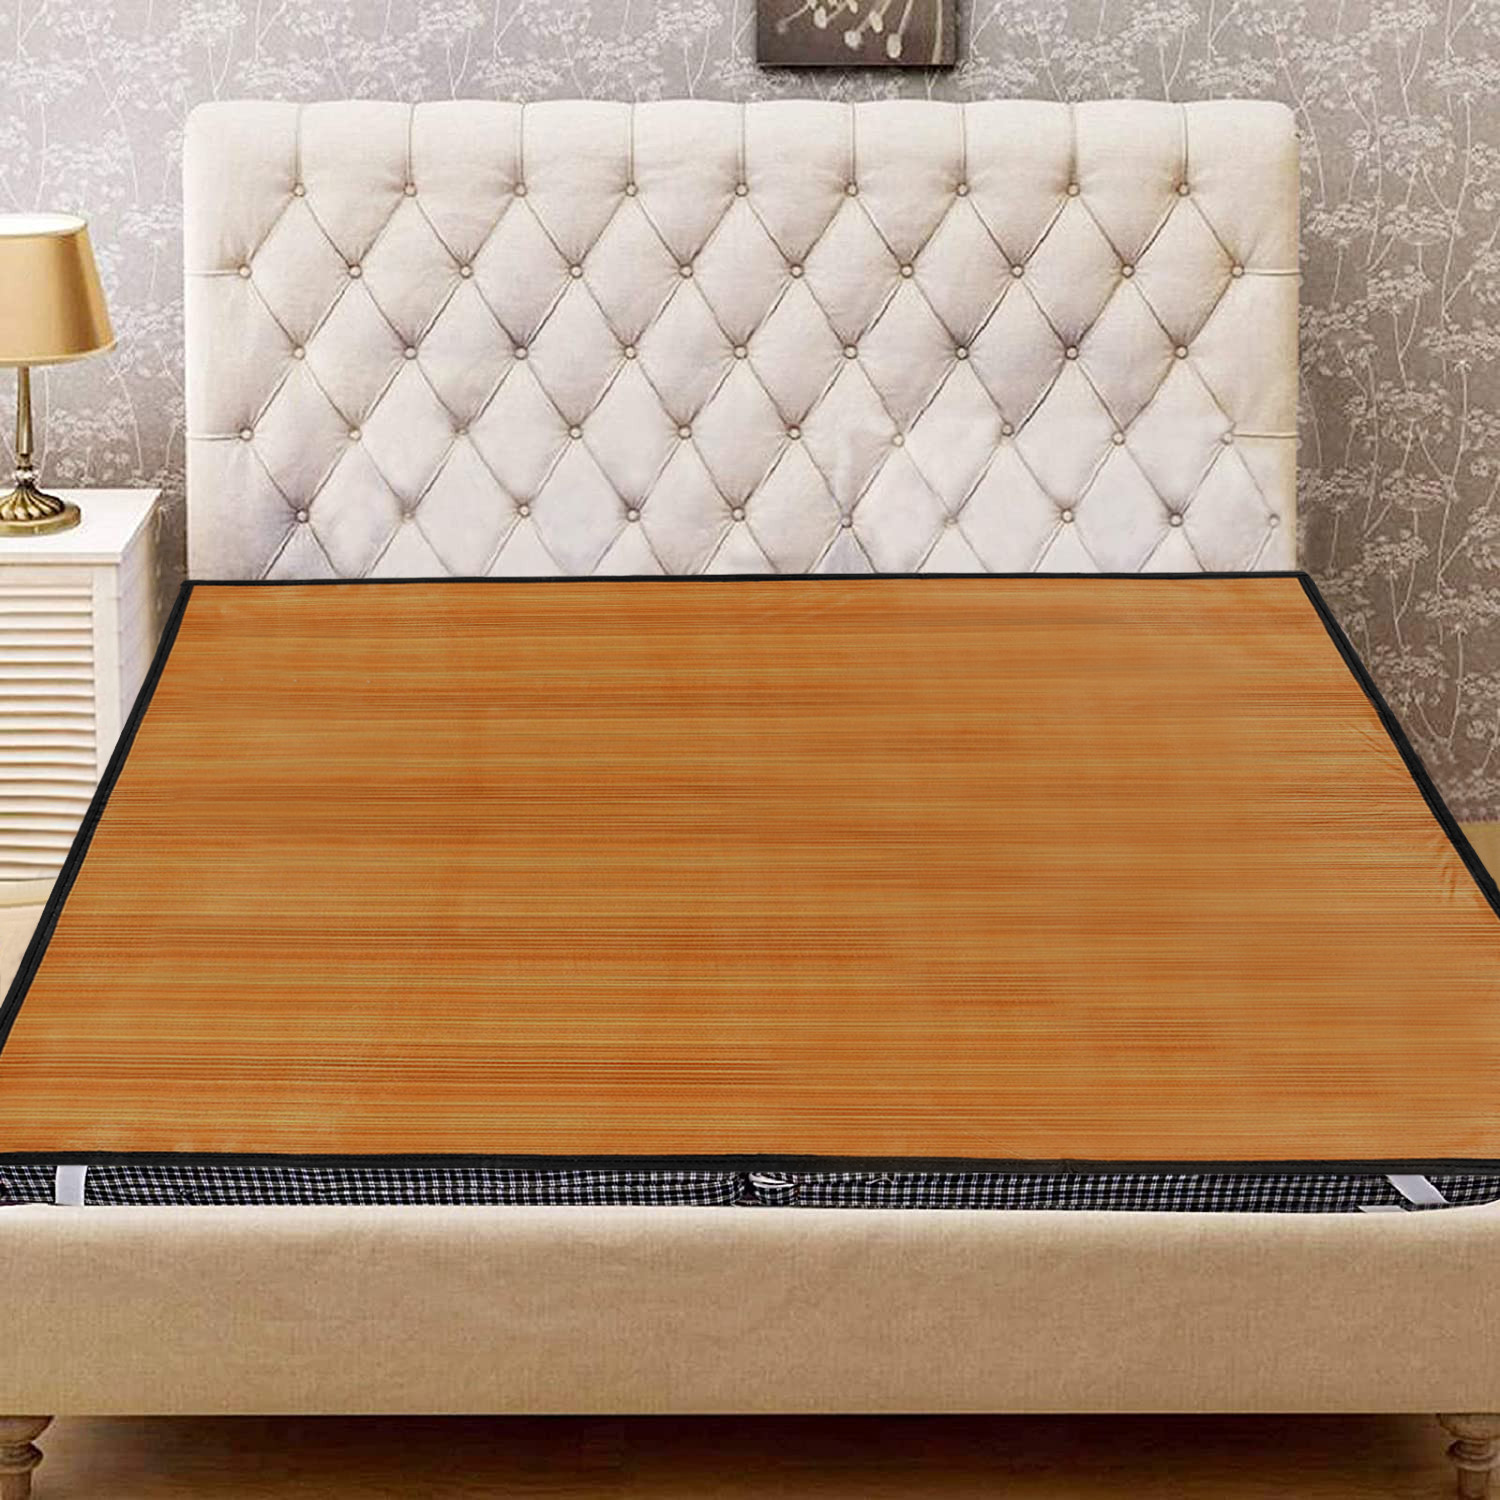 Kuber Industries Wooden Design PVC Double Bed Mattress Protector, 72